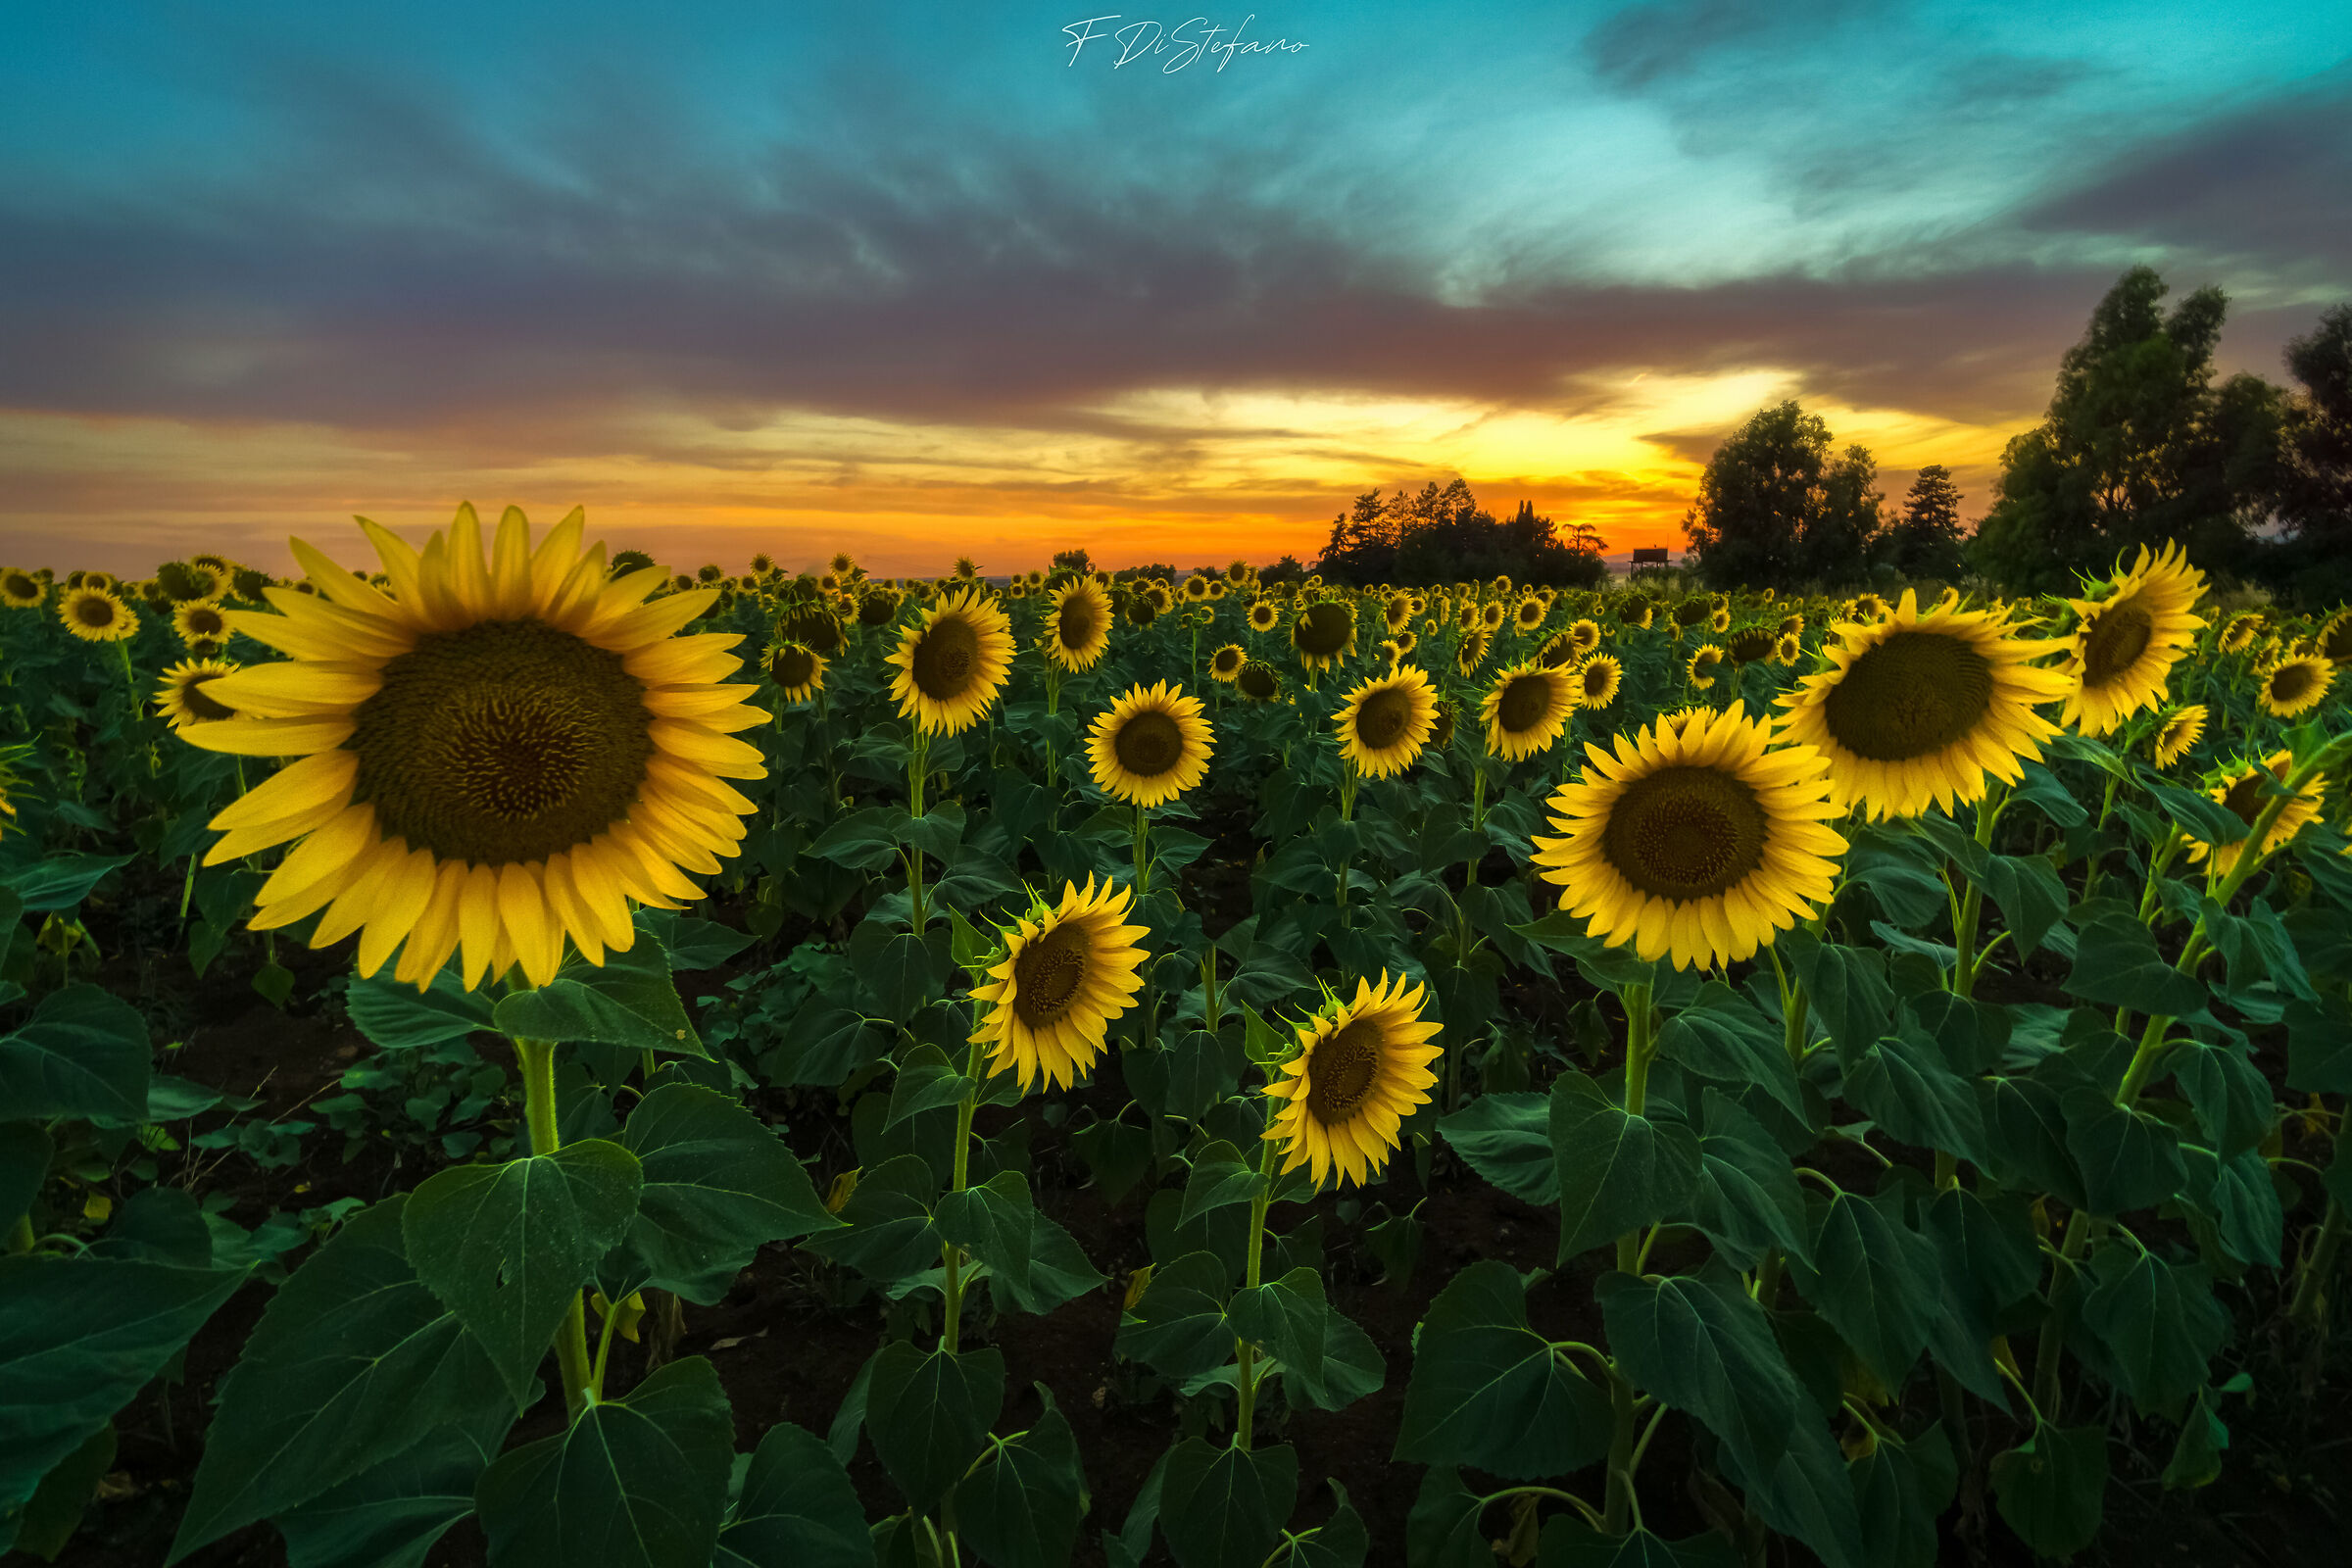 Sunflowers before dawn...